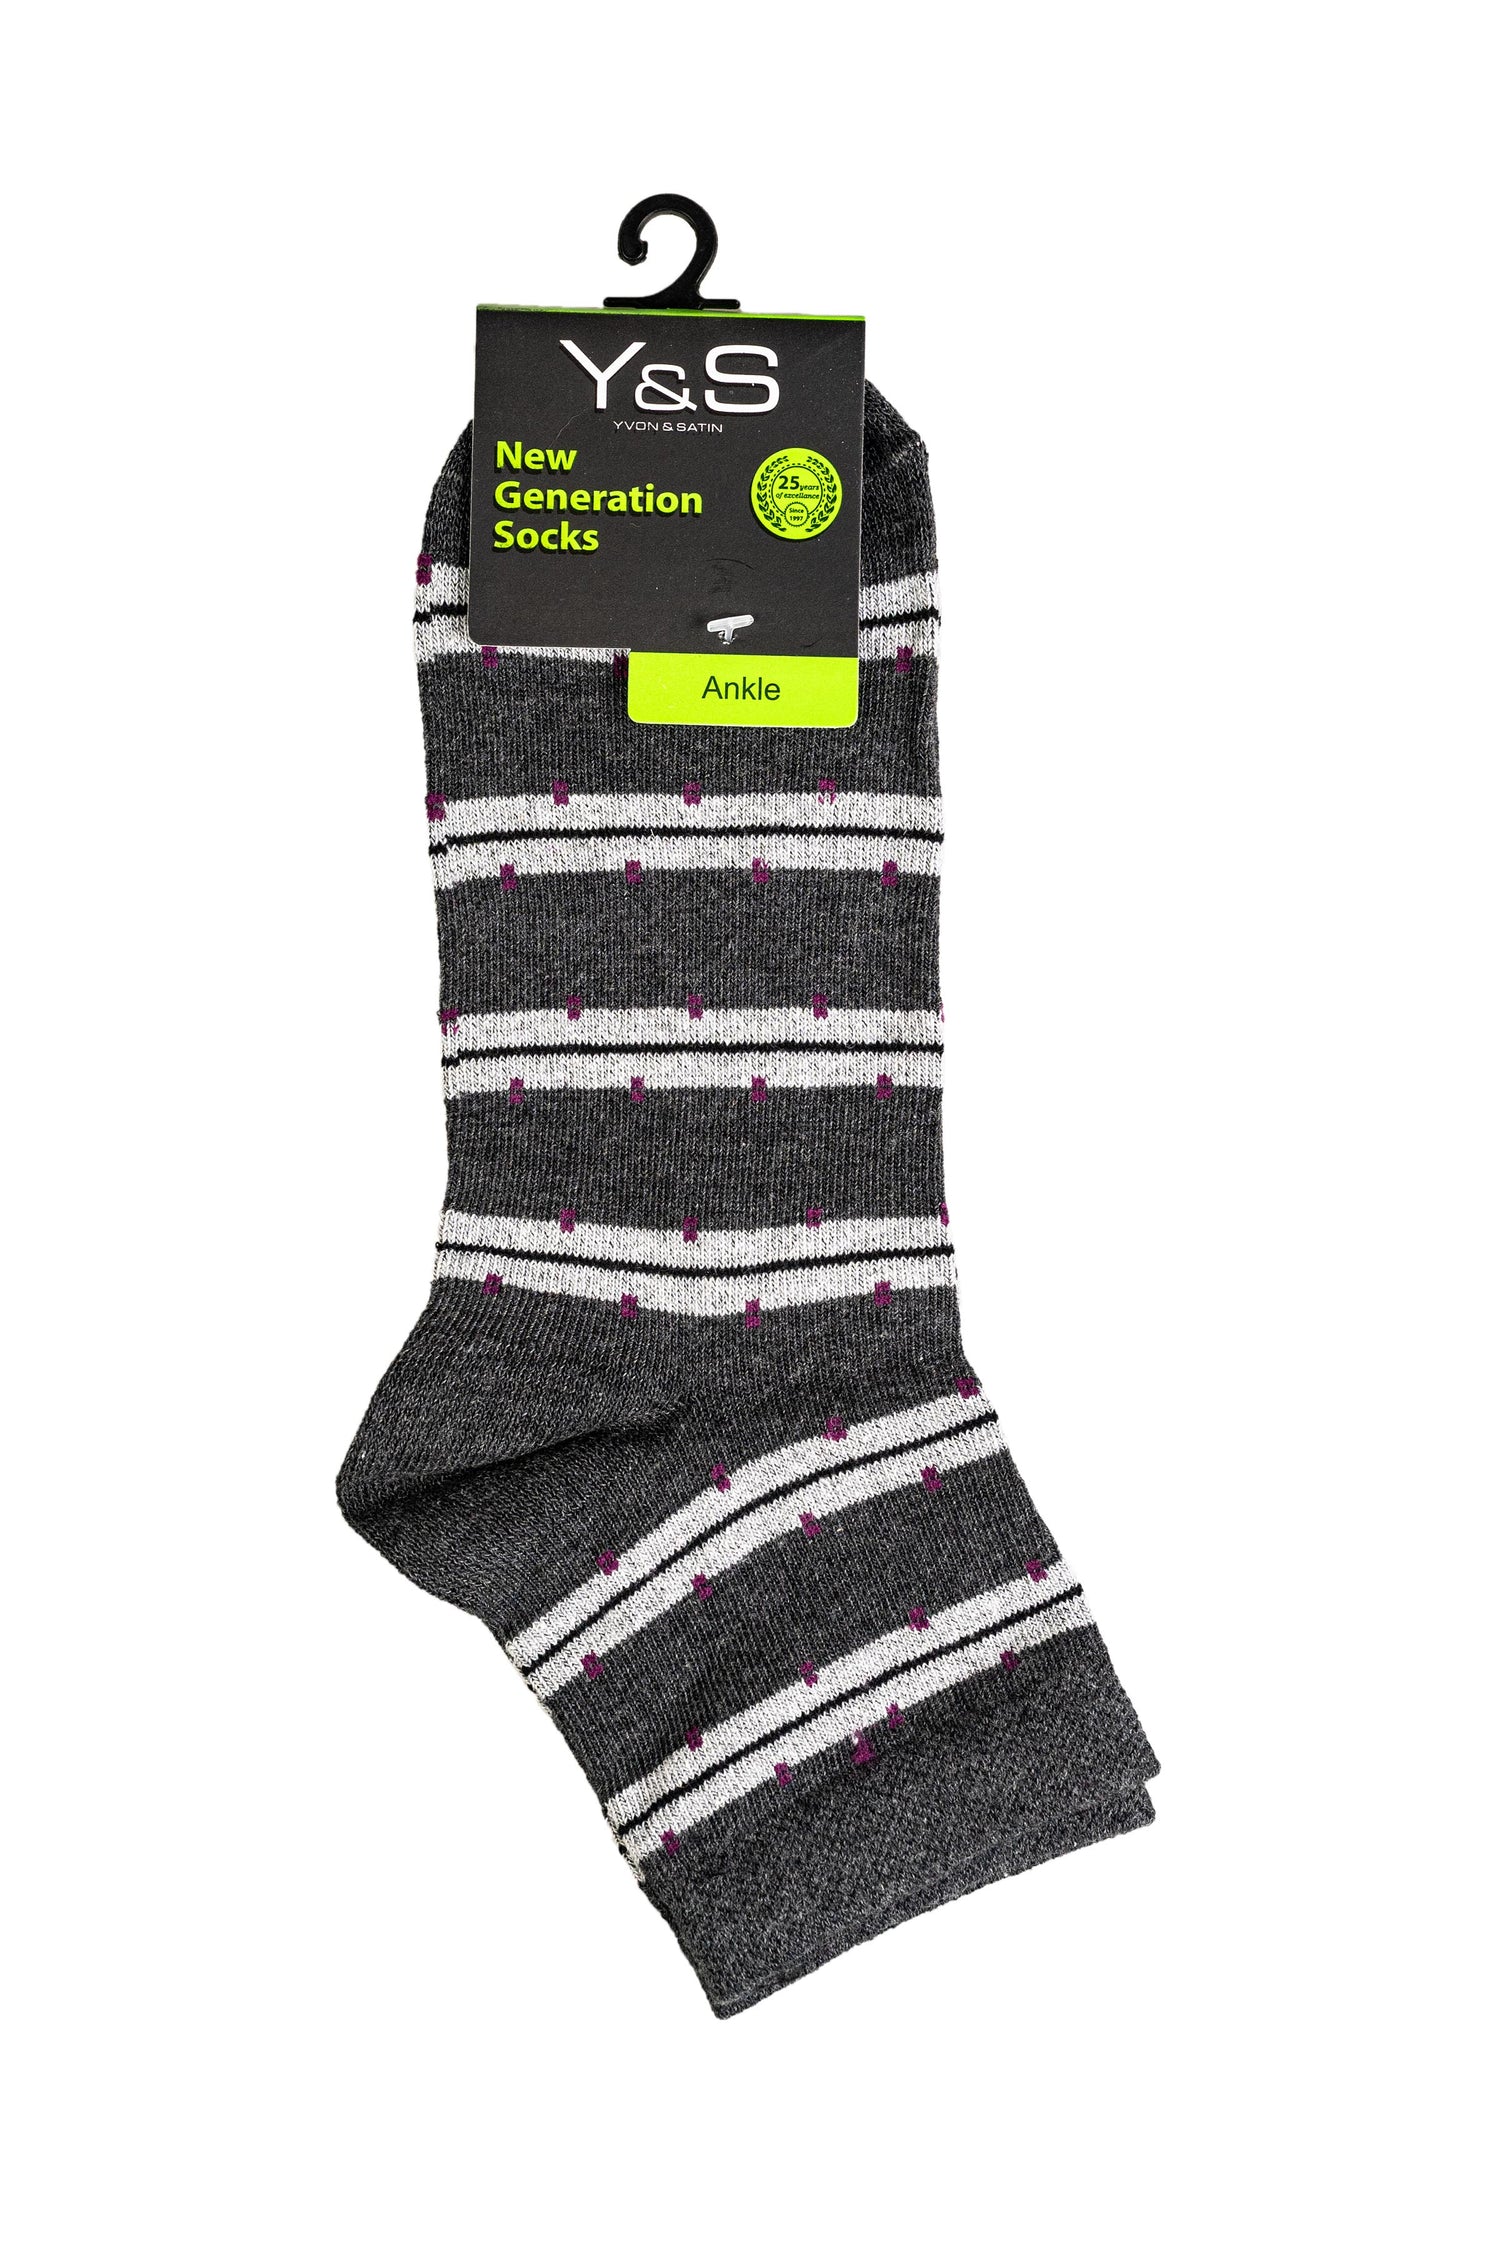 Titas Gents Comfort Blend Assorted Socks